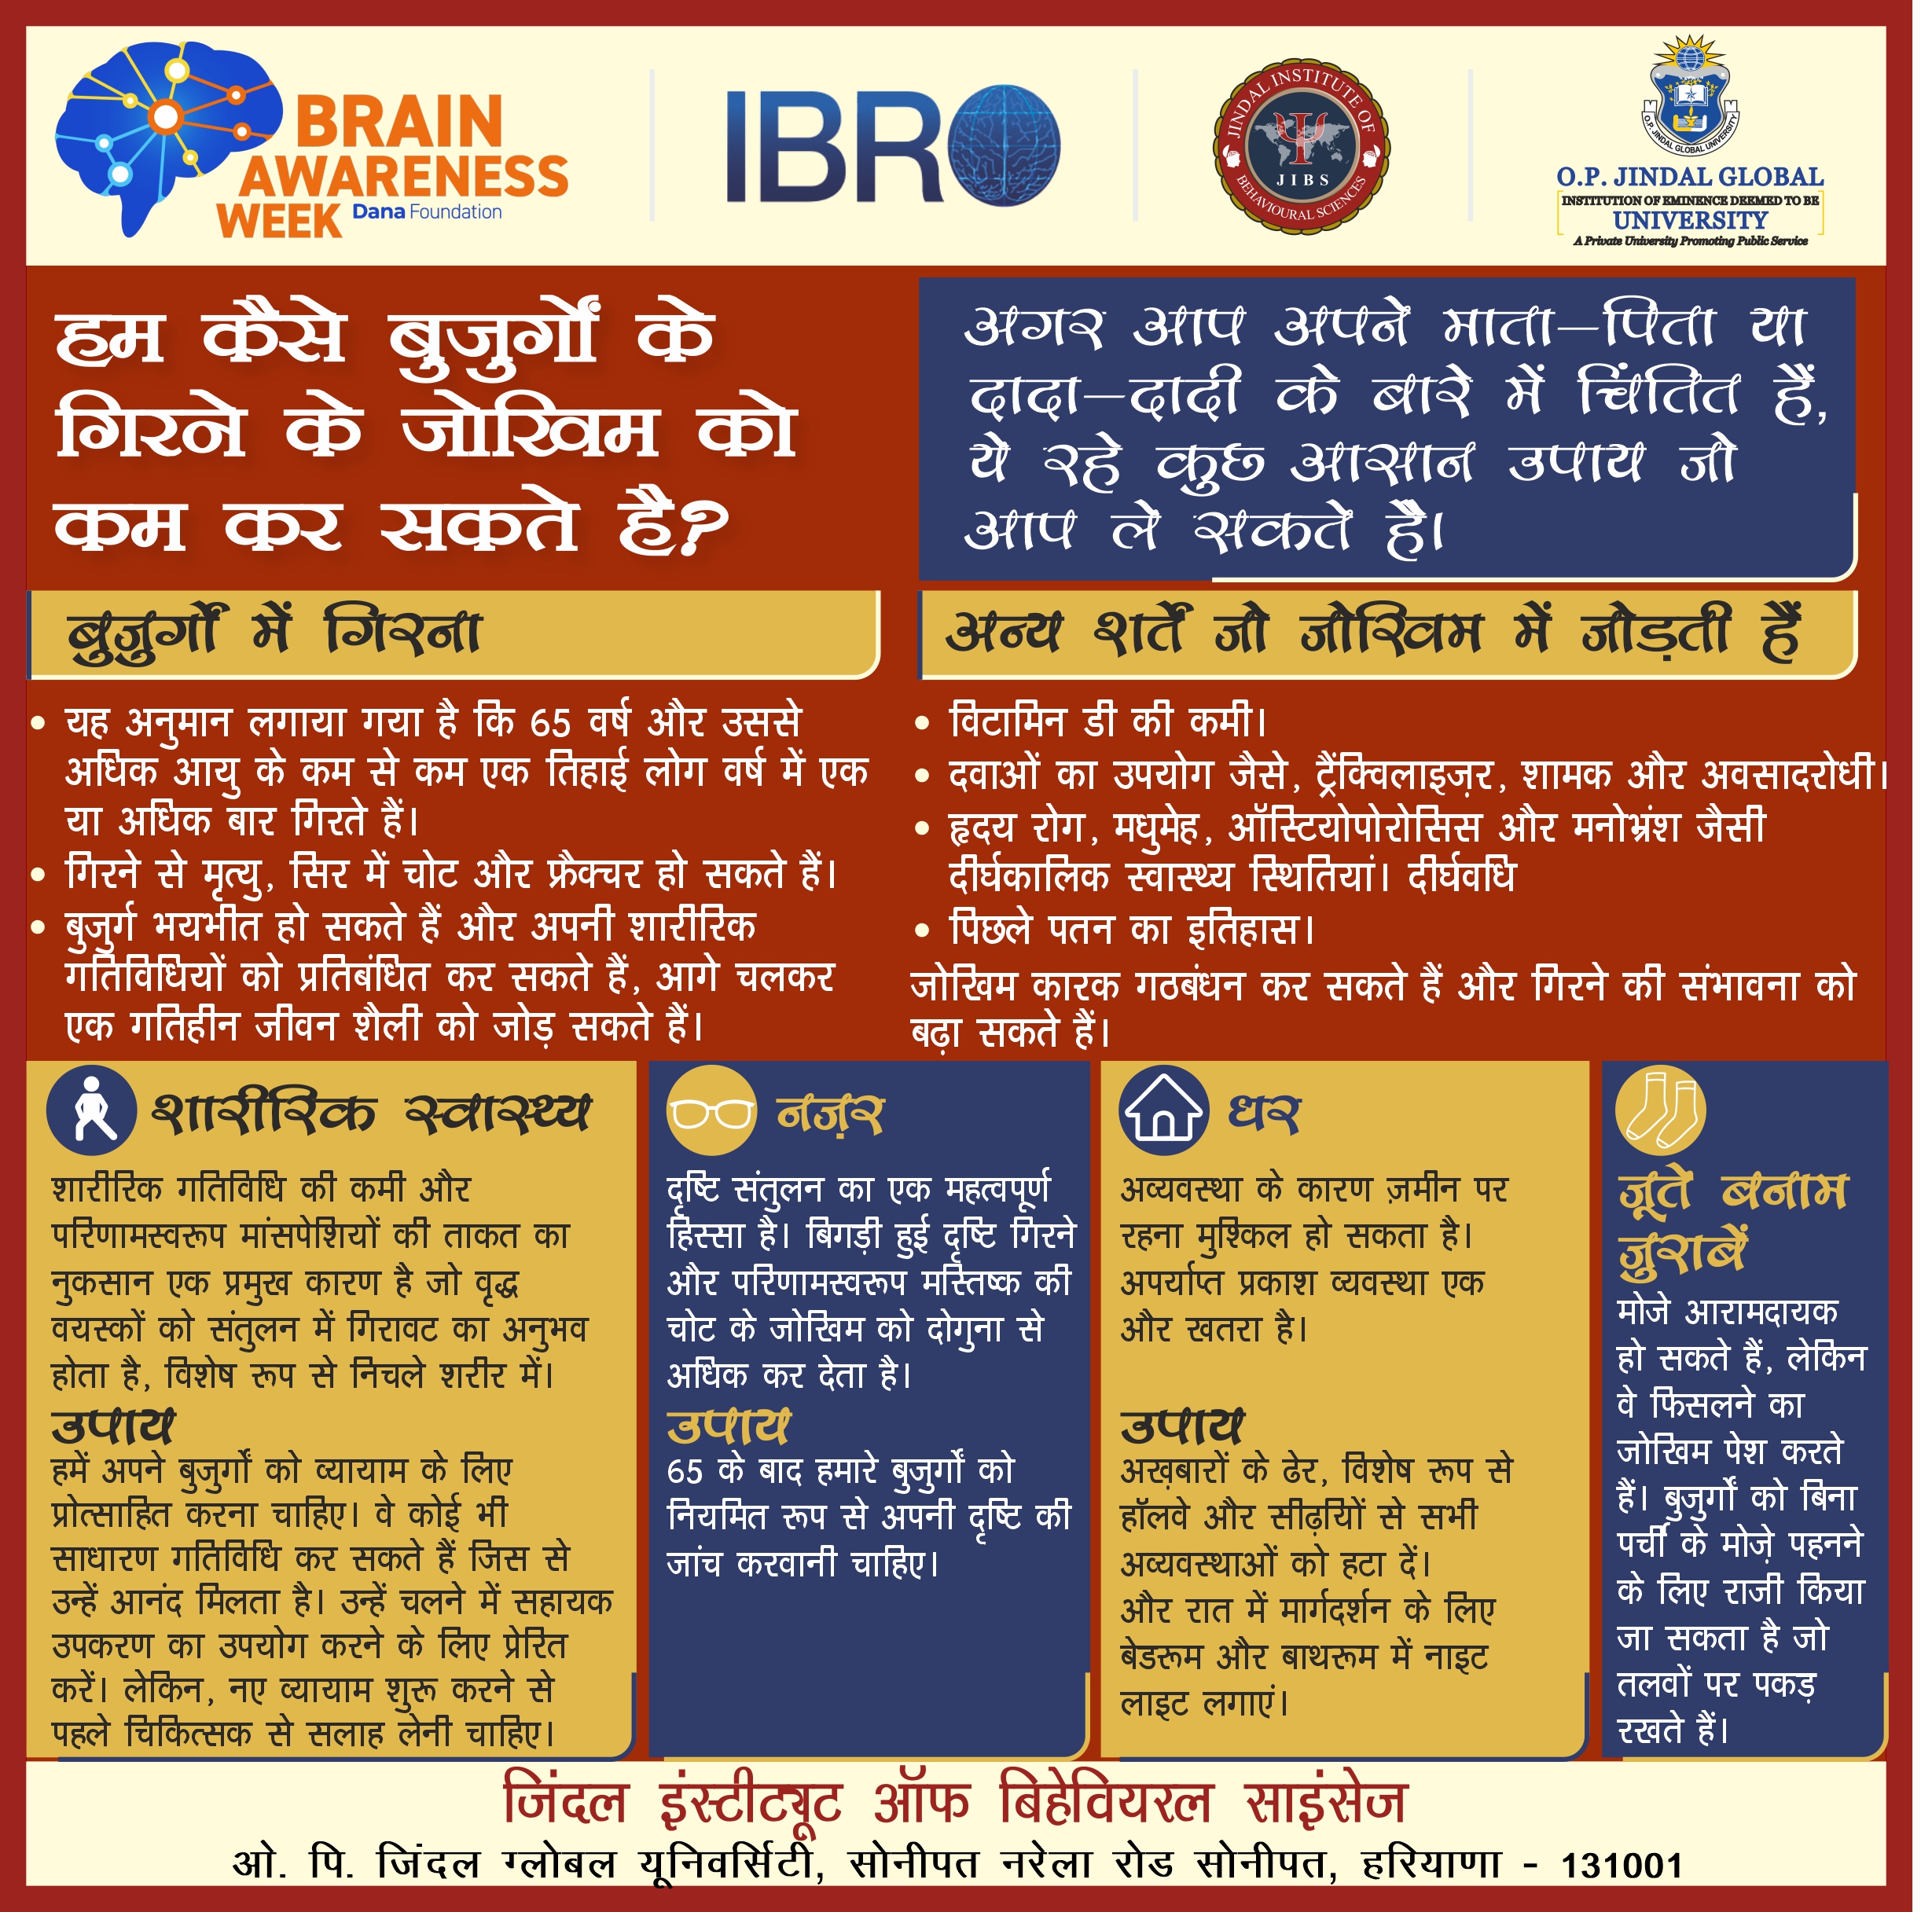 Poster 3- Brain Awareness Week 2022 (Hindi)